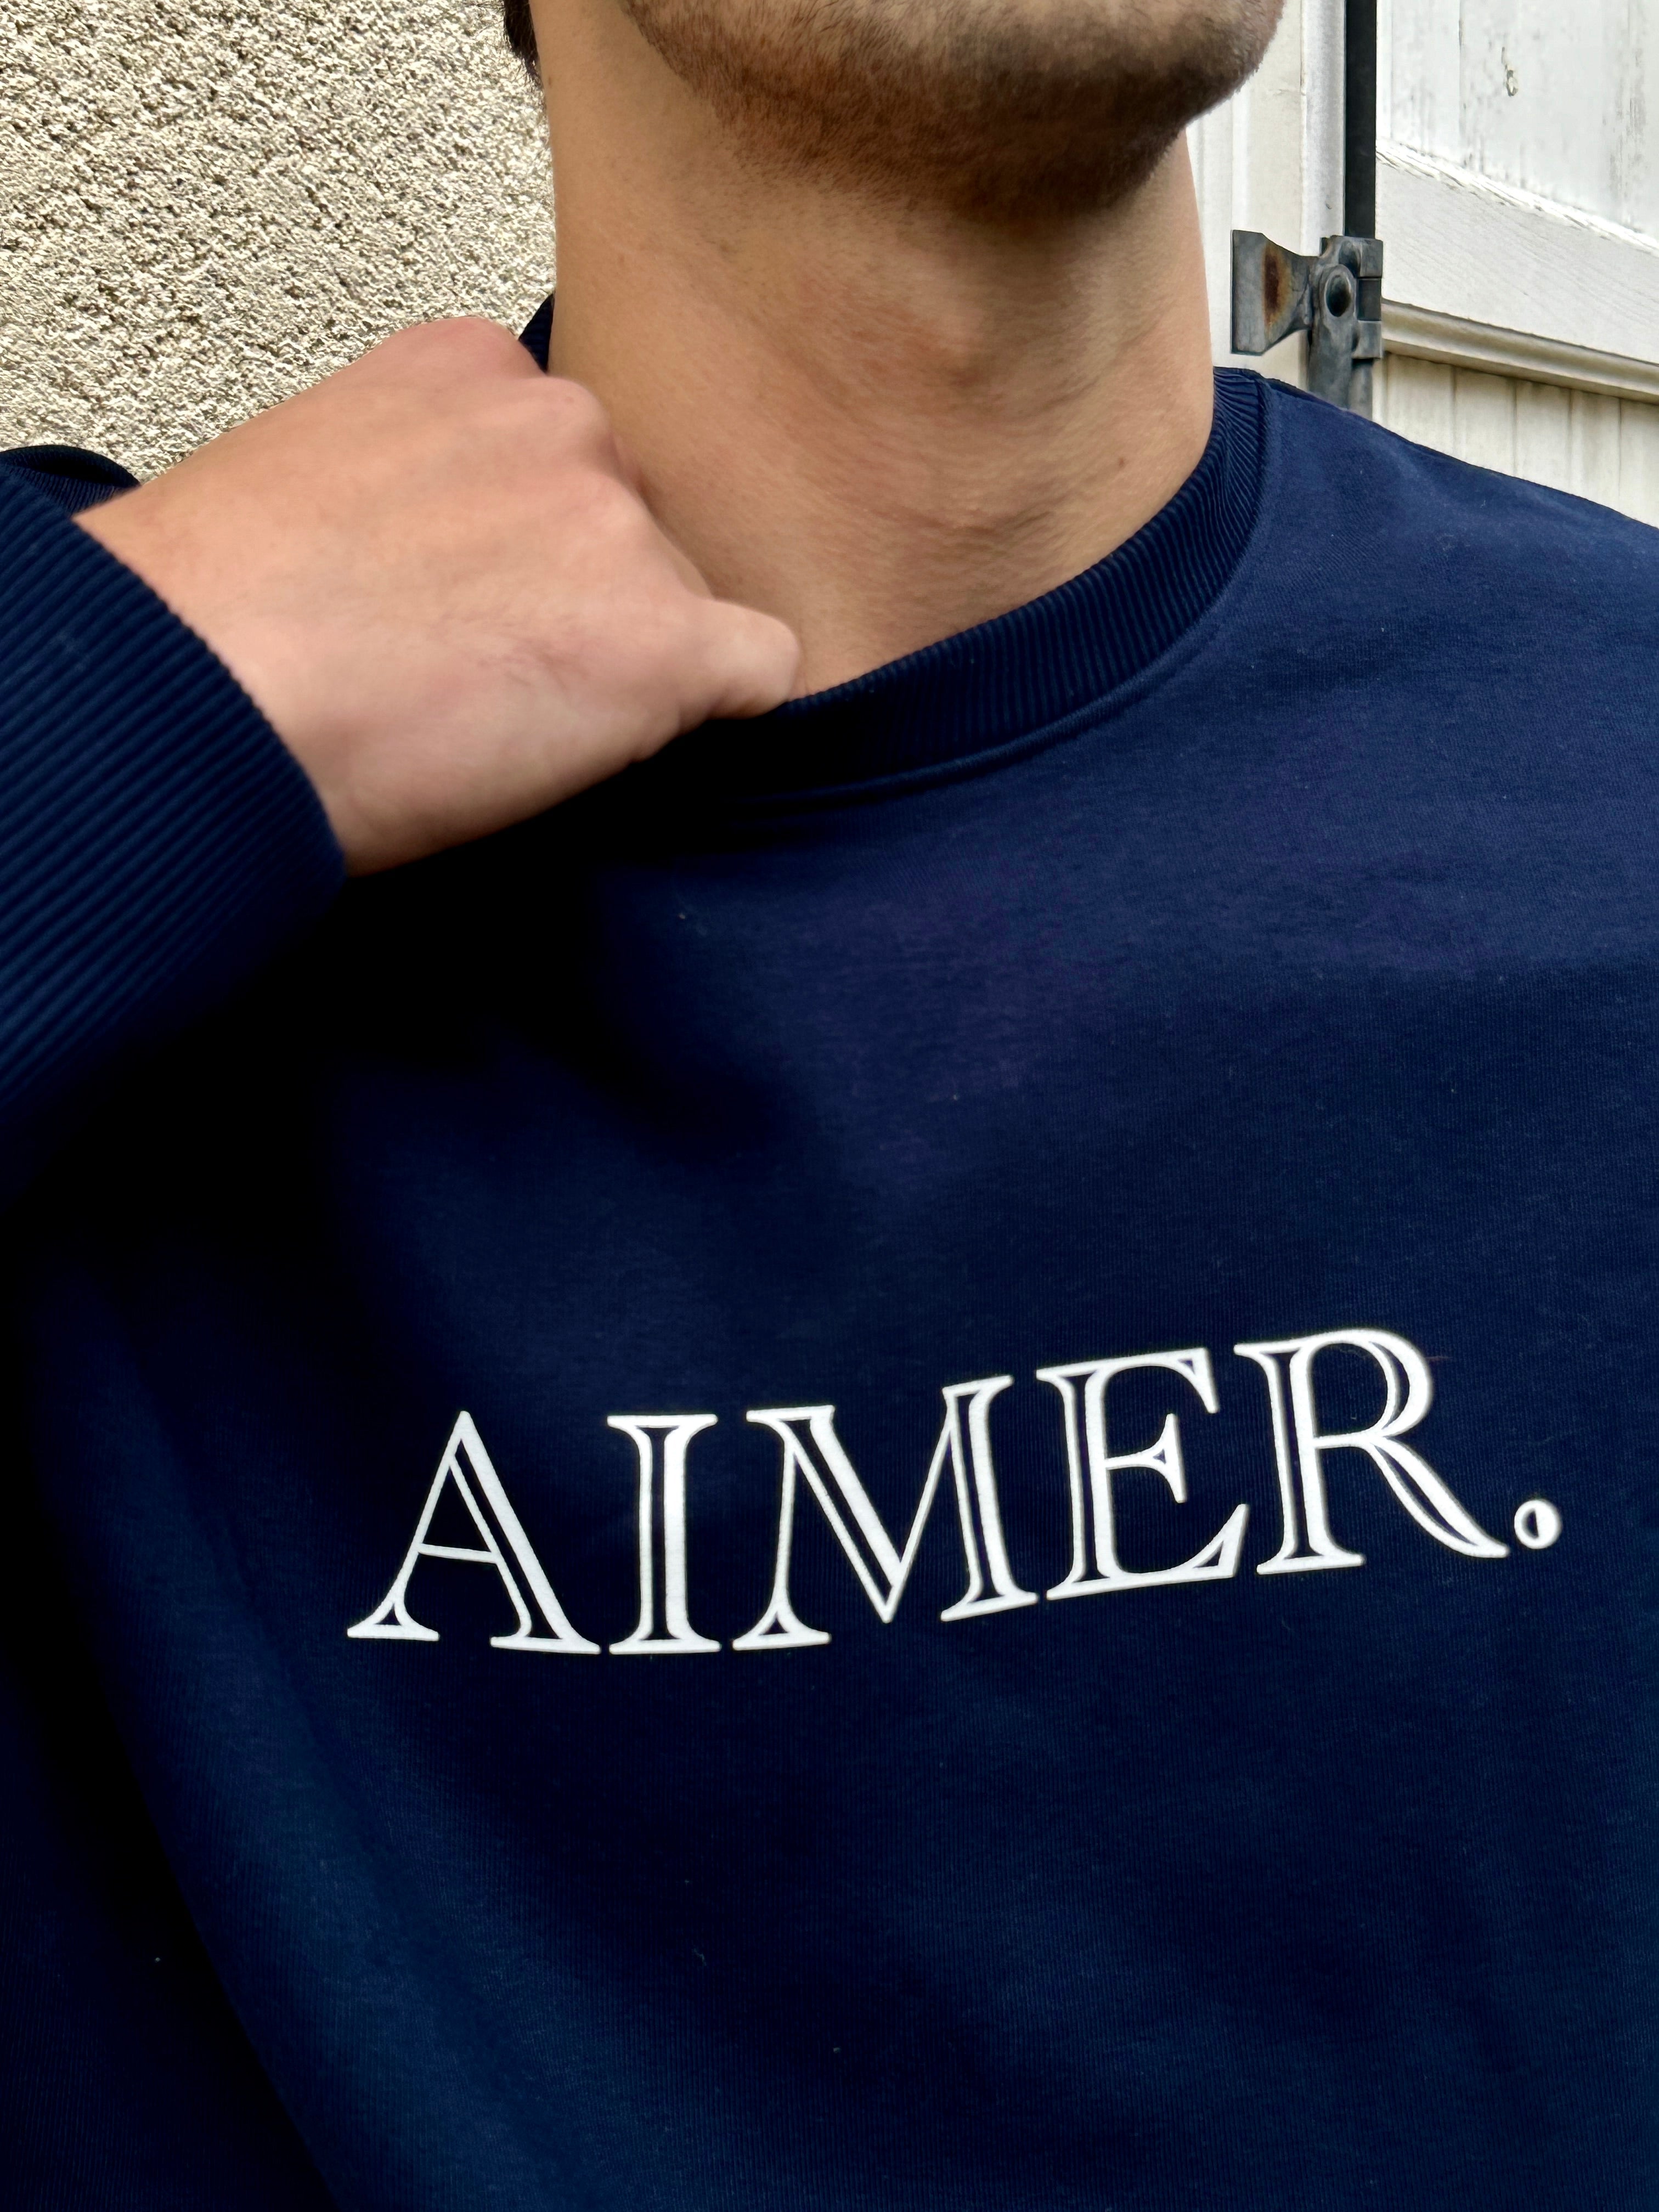 Aimer. unisex crewneck sweater [Color options] - Les Petits Basics